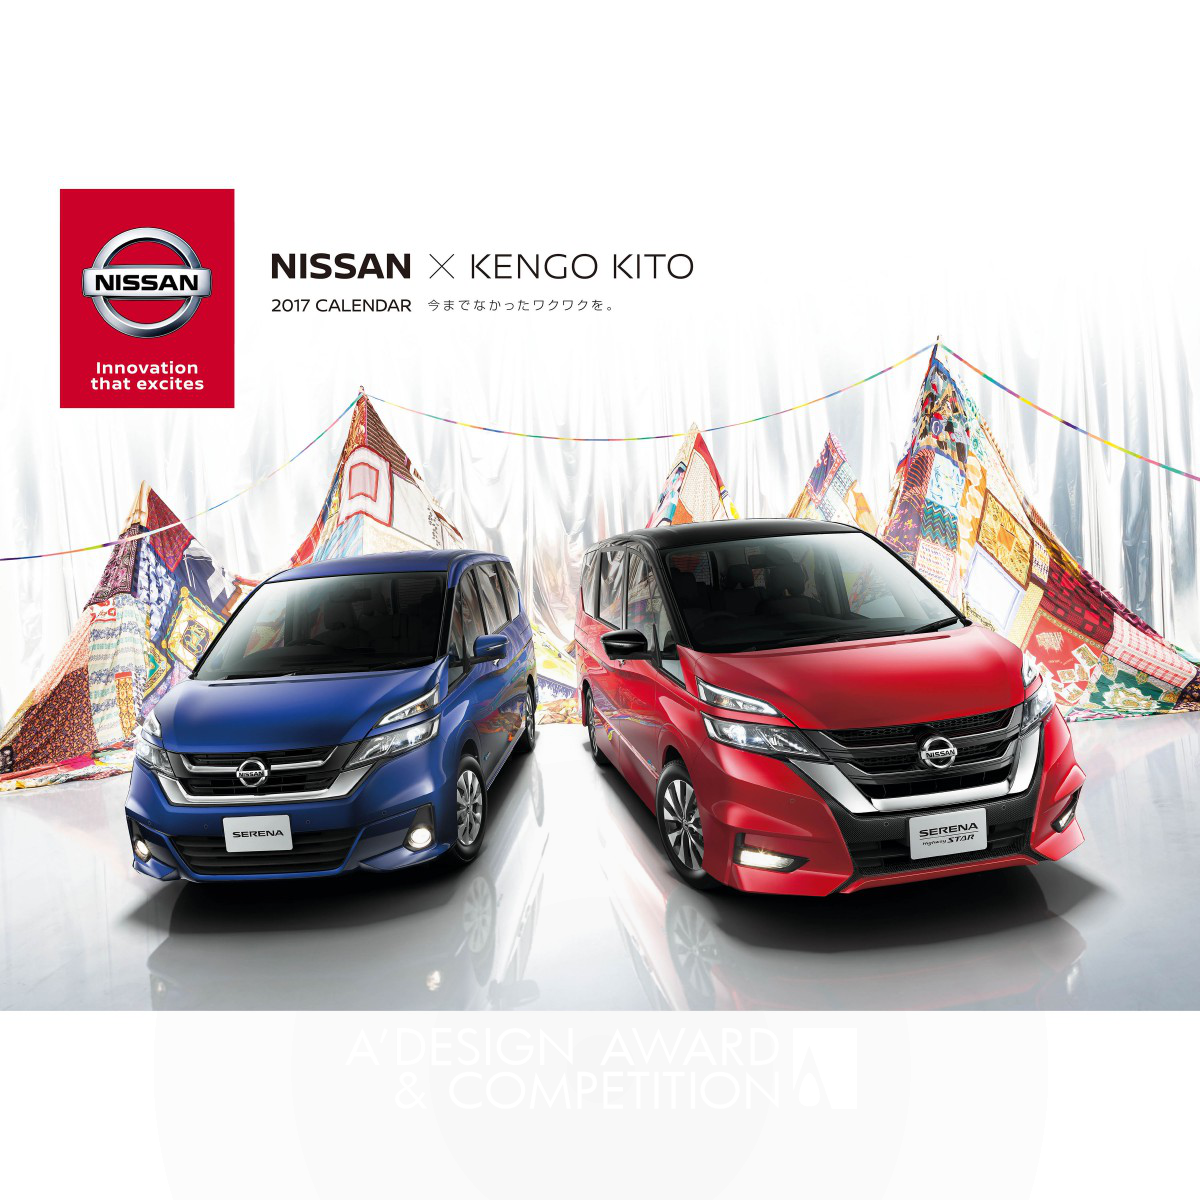 NISSAN × KENGO KITO: A Fusion of Art and Automotive Design